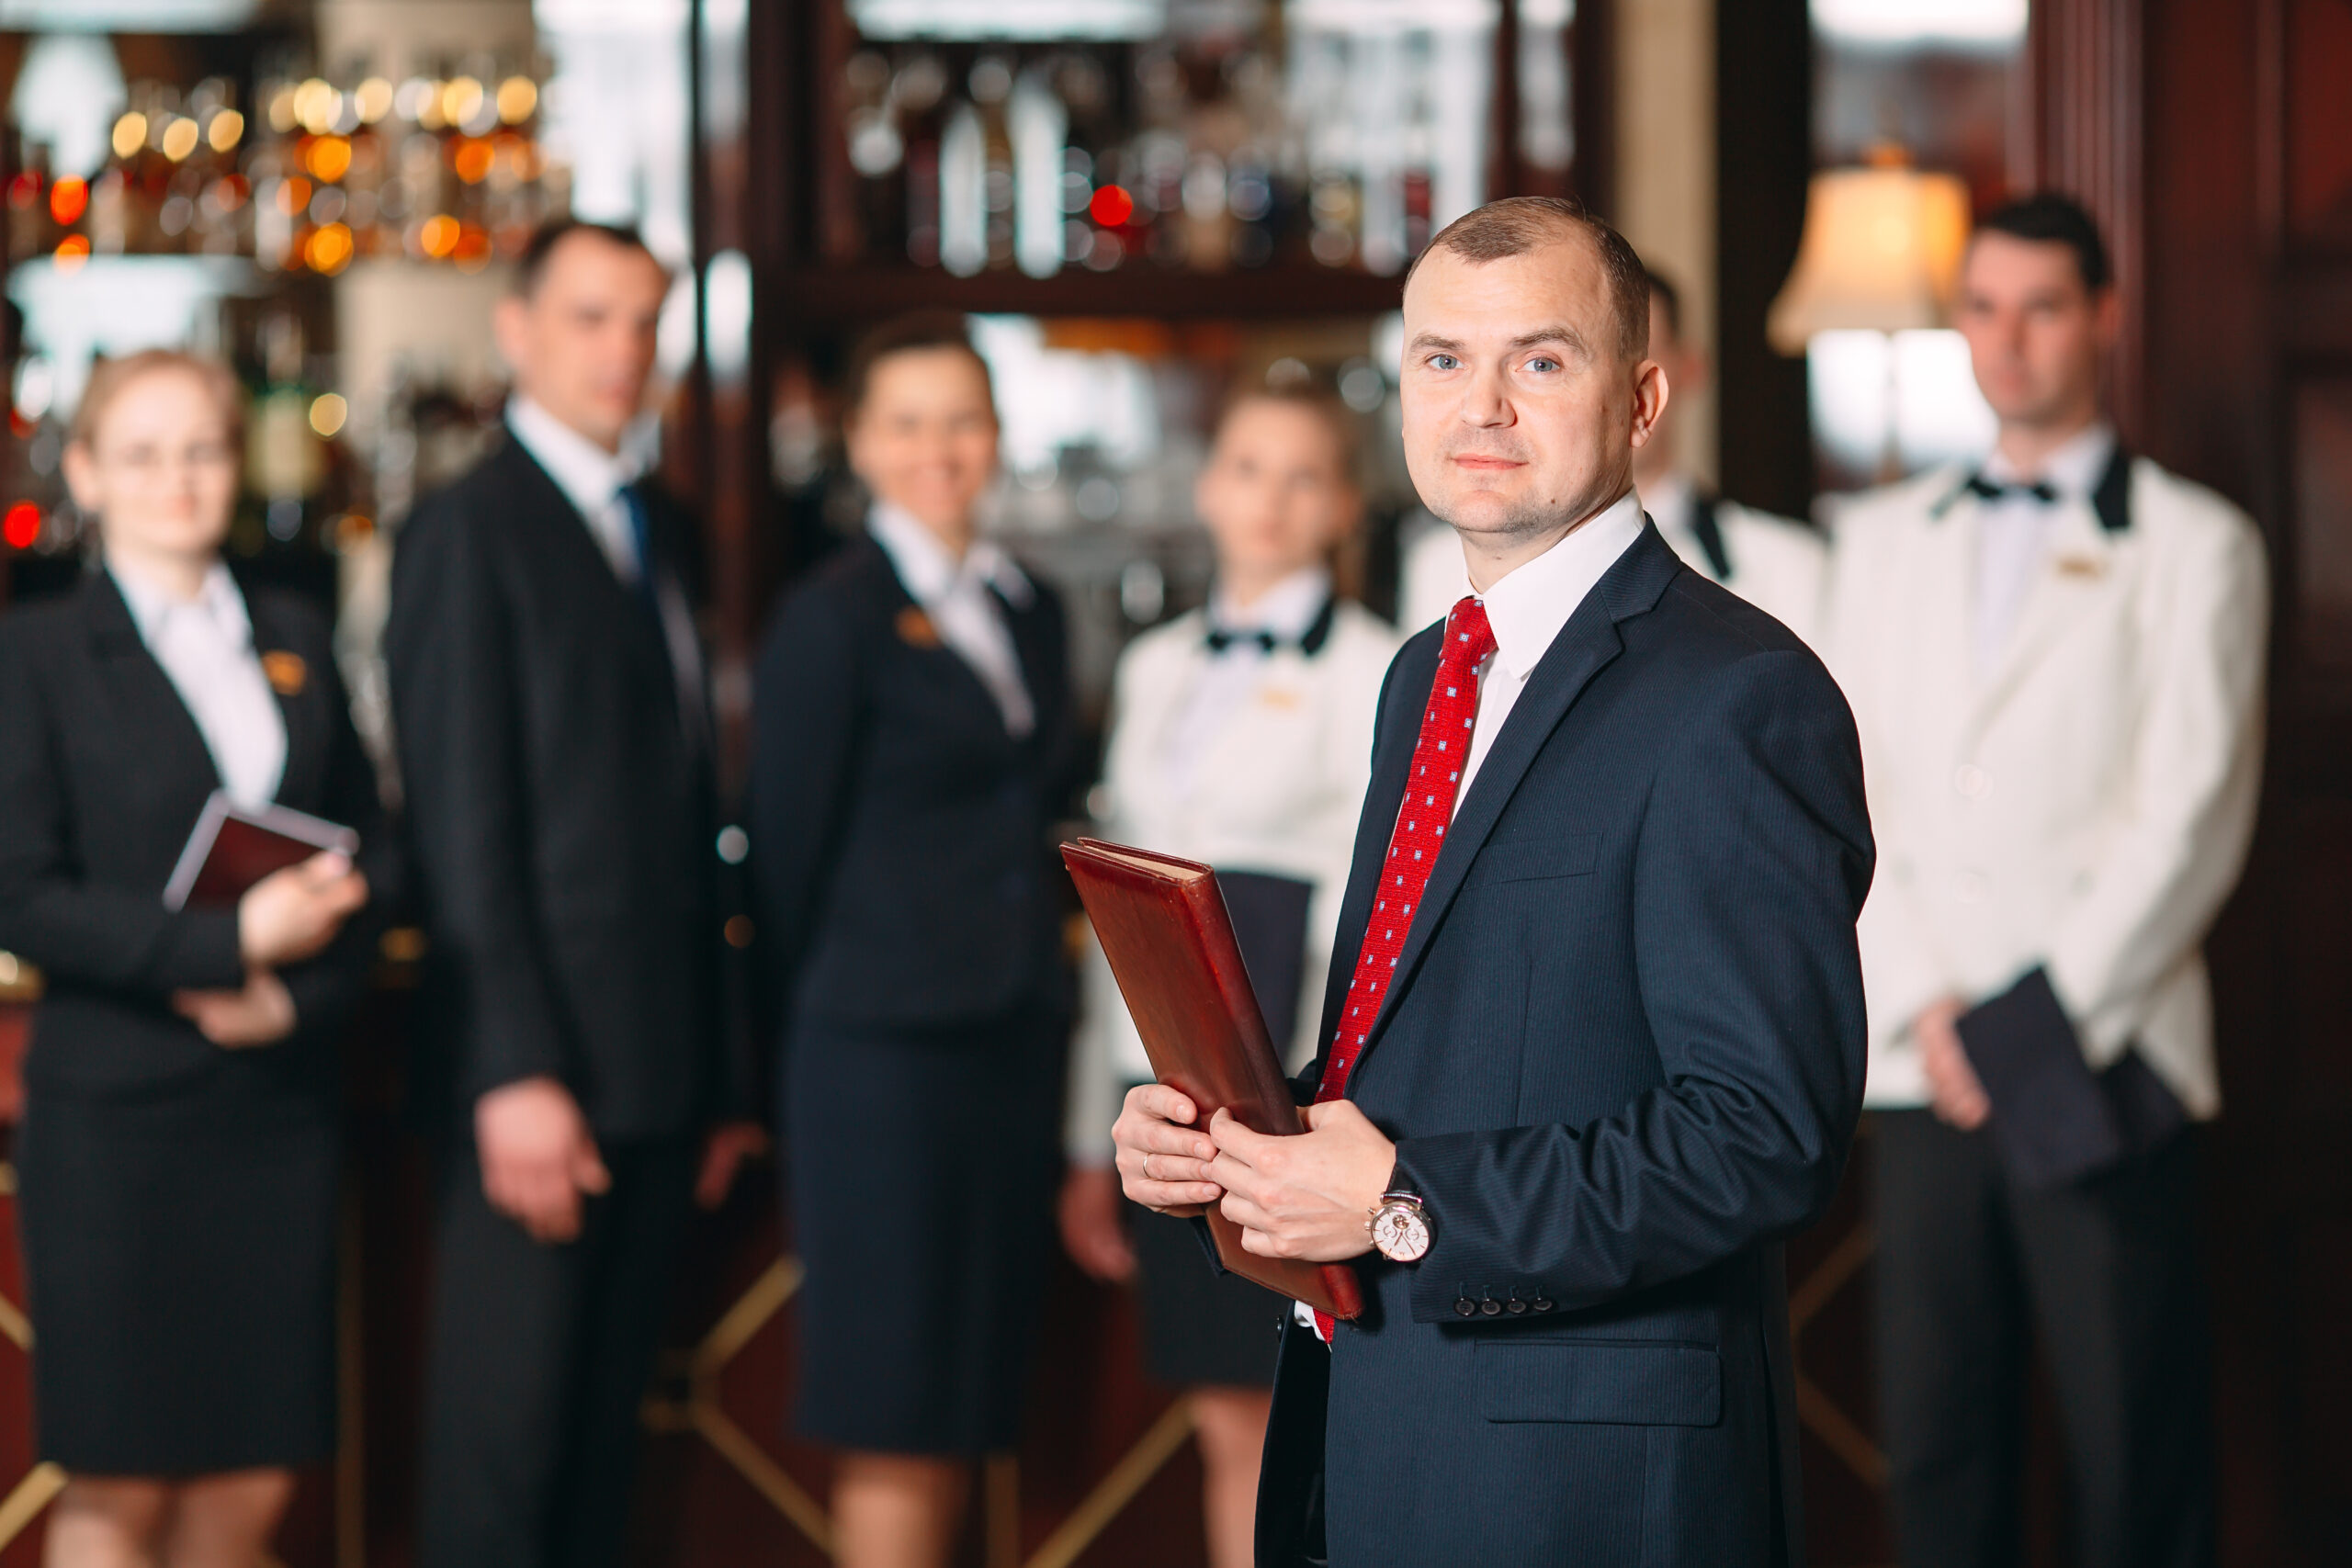 Hotel or restaurant manager